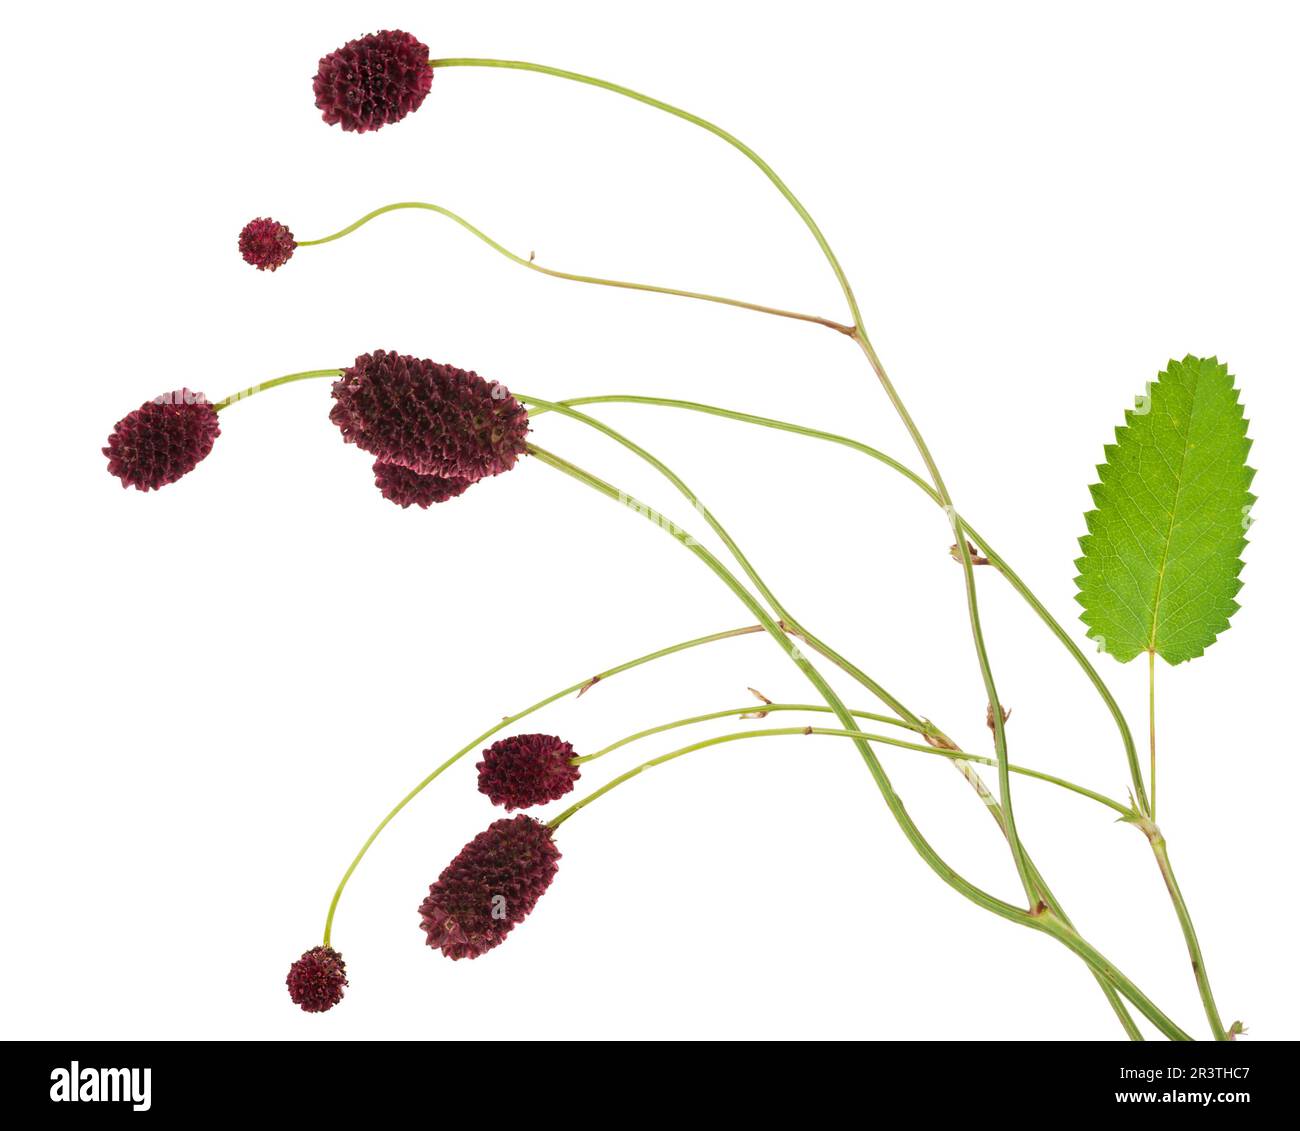 Medicinal plant: Burnet (Sanguisorba officinalis) Stock Photo